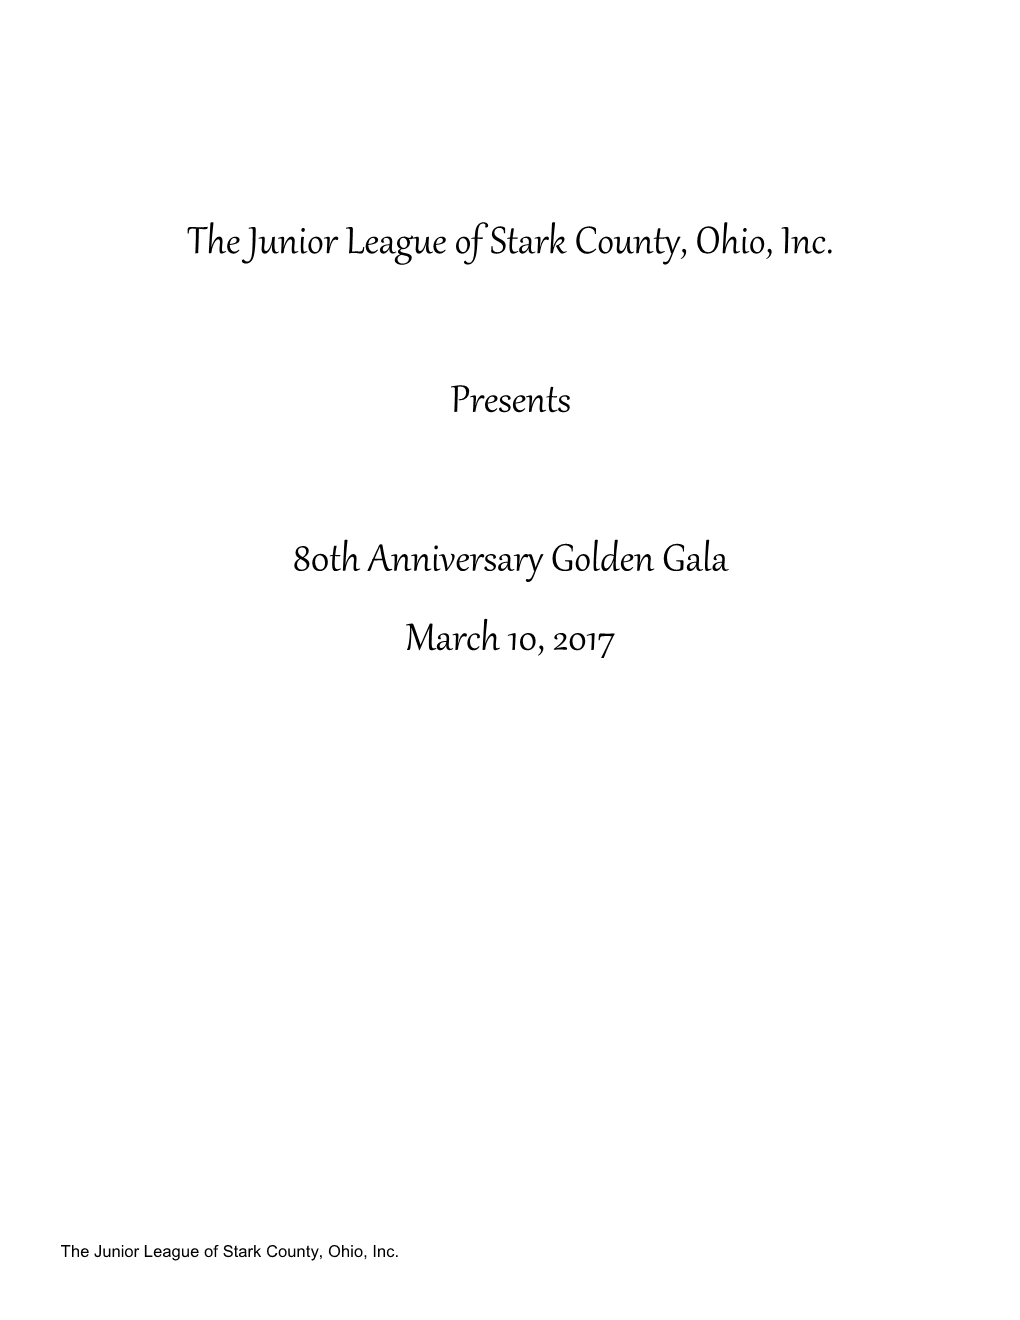 The Junior League of Stark County, Ohio, Inc. Presents 80Th